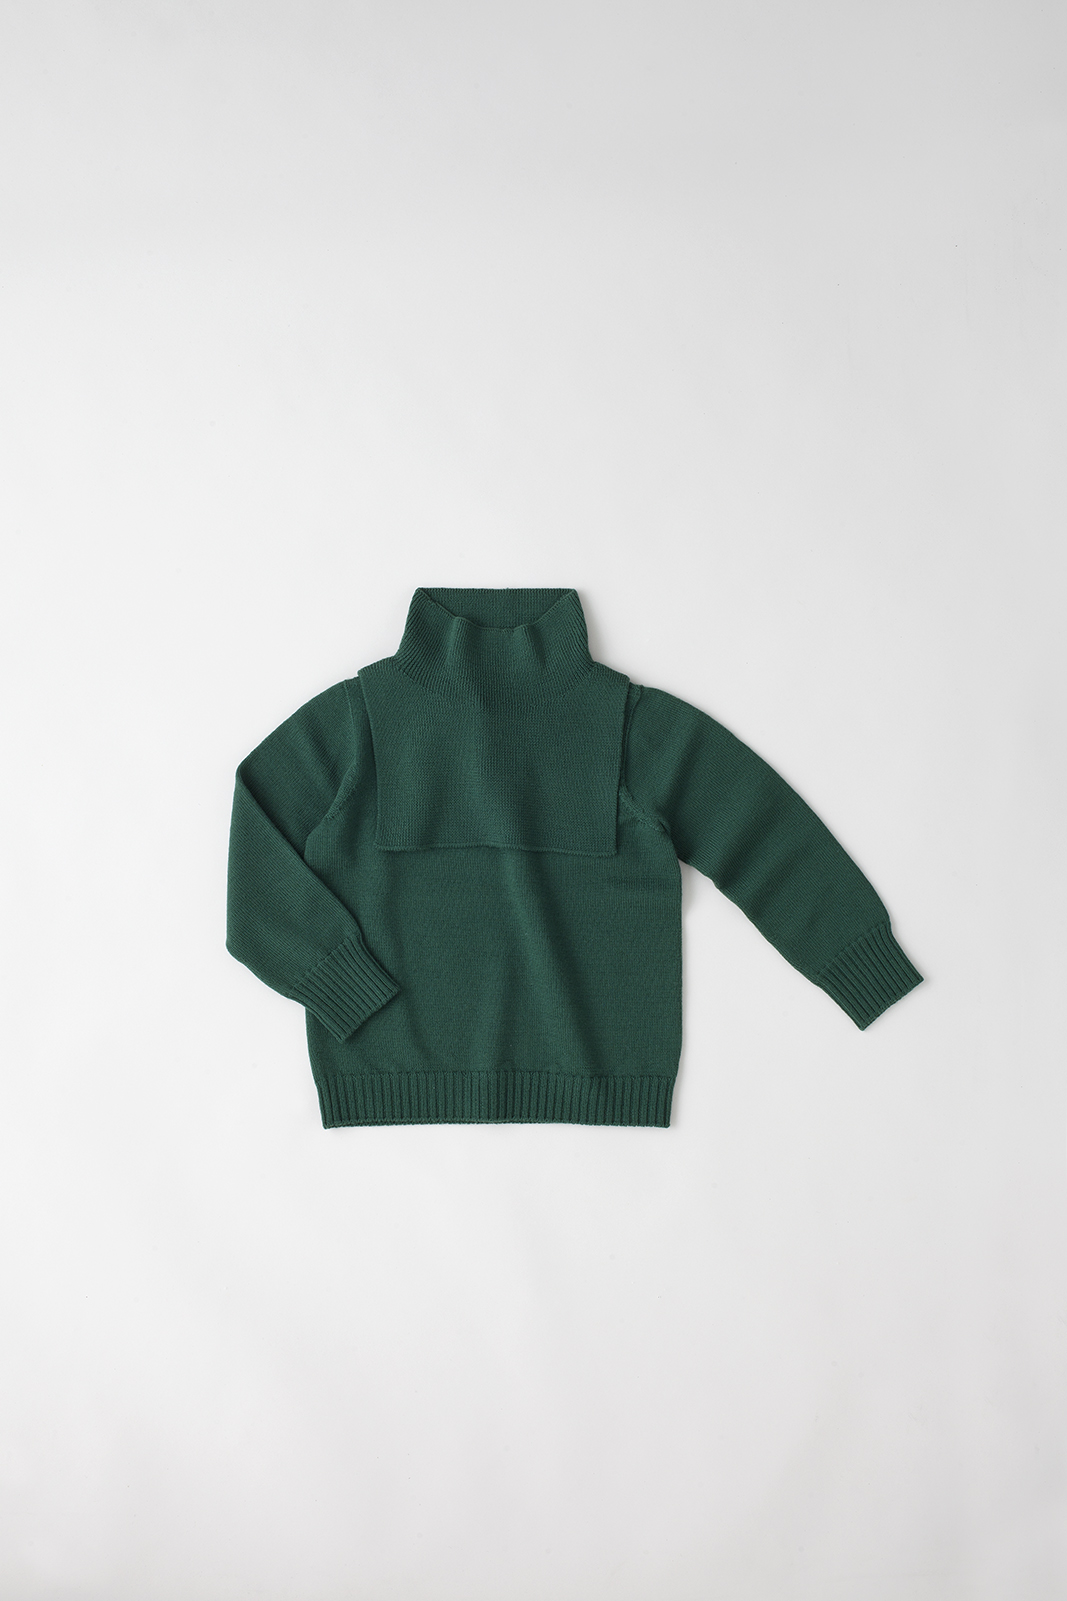 Camphor カンフル ニット knitwear kids こども 子供服 familysweater 日本製 madeinjapan